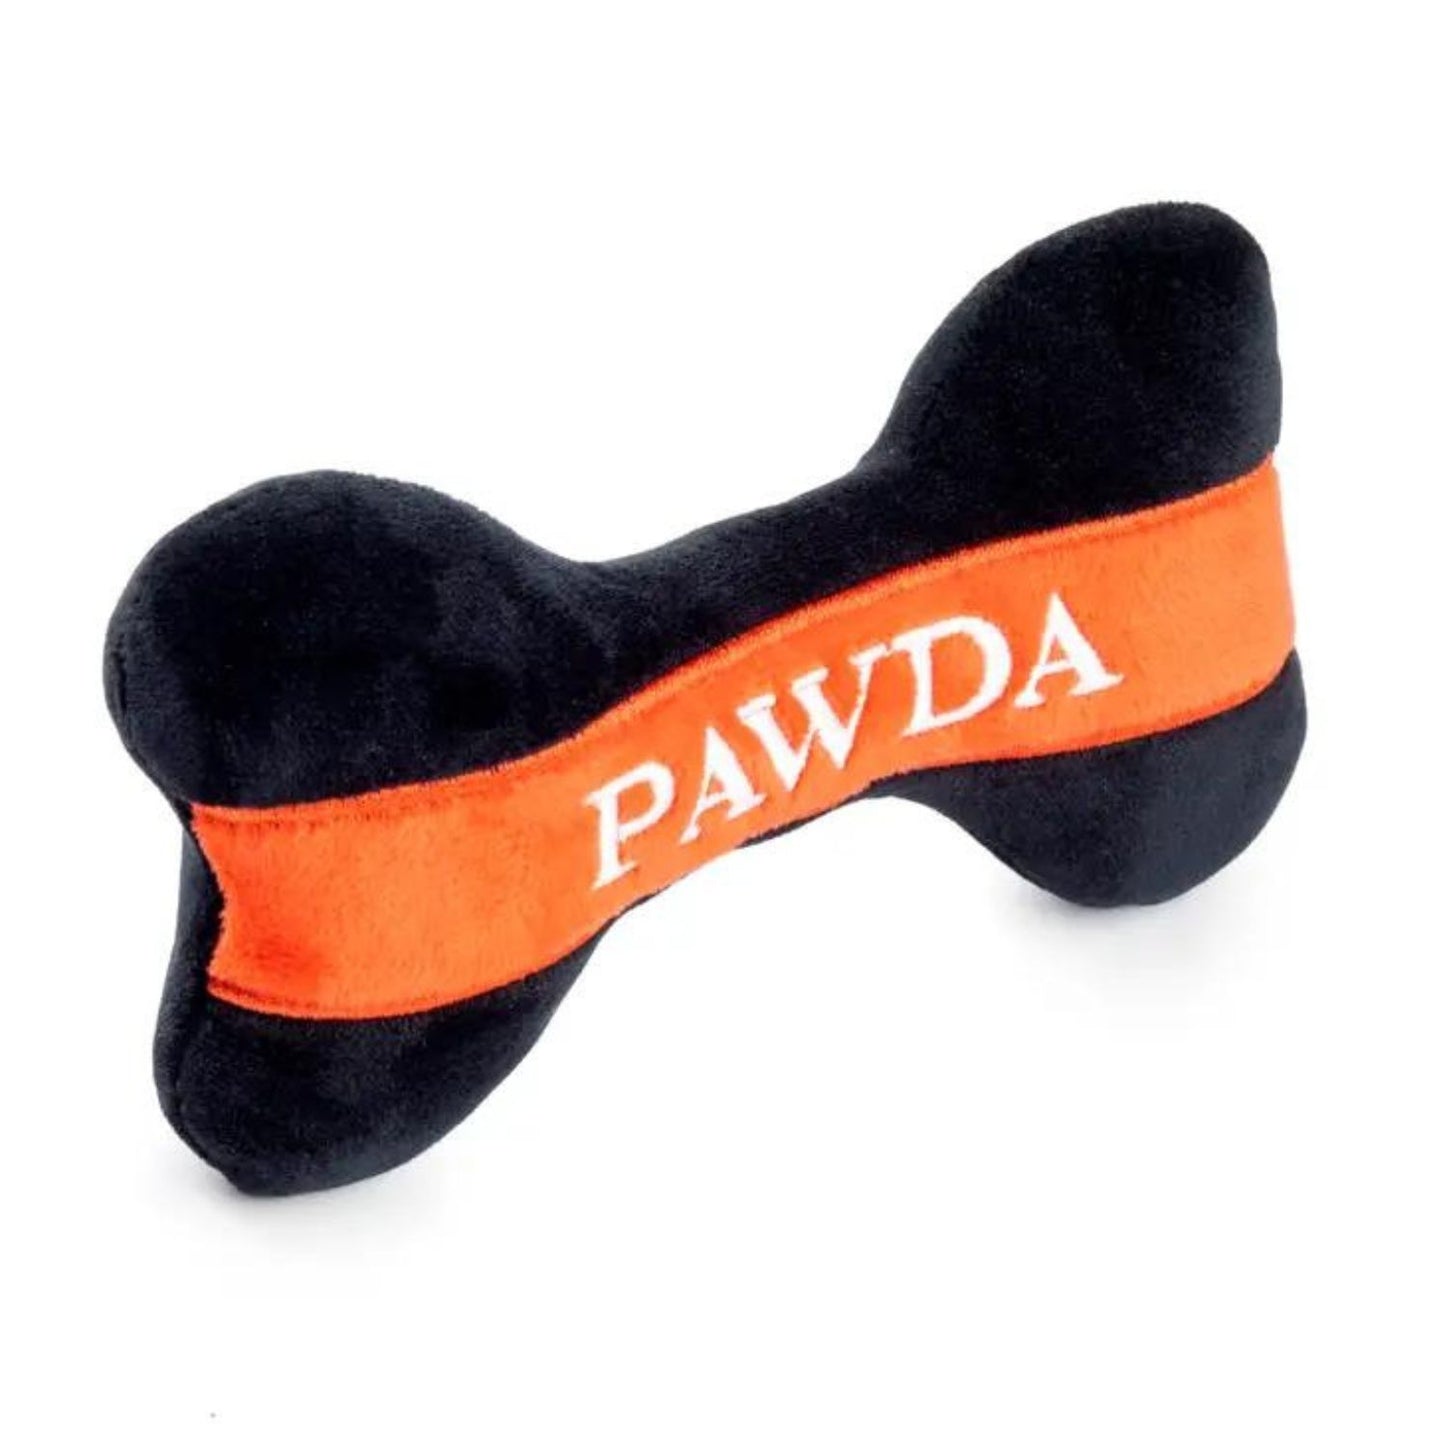 Plush Dog Toy | Pawda Bone